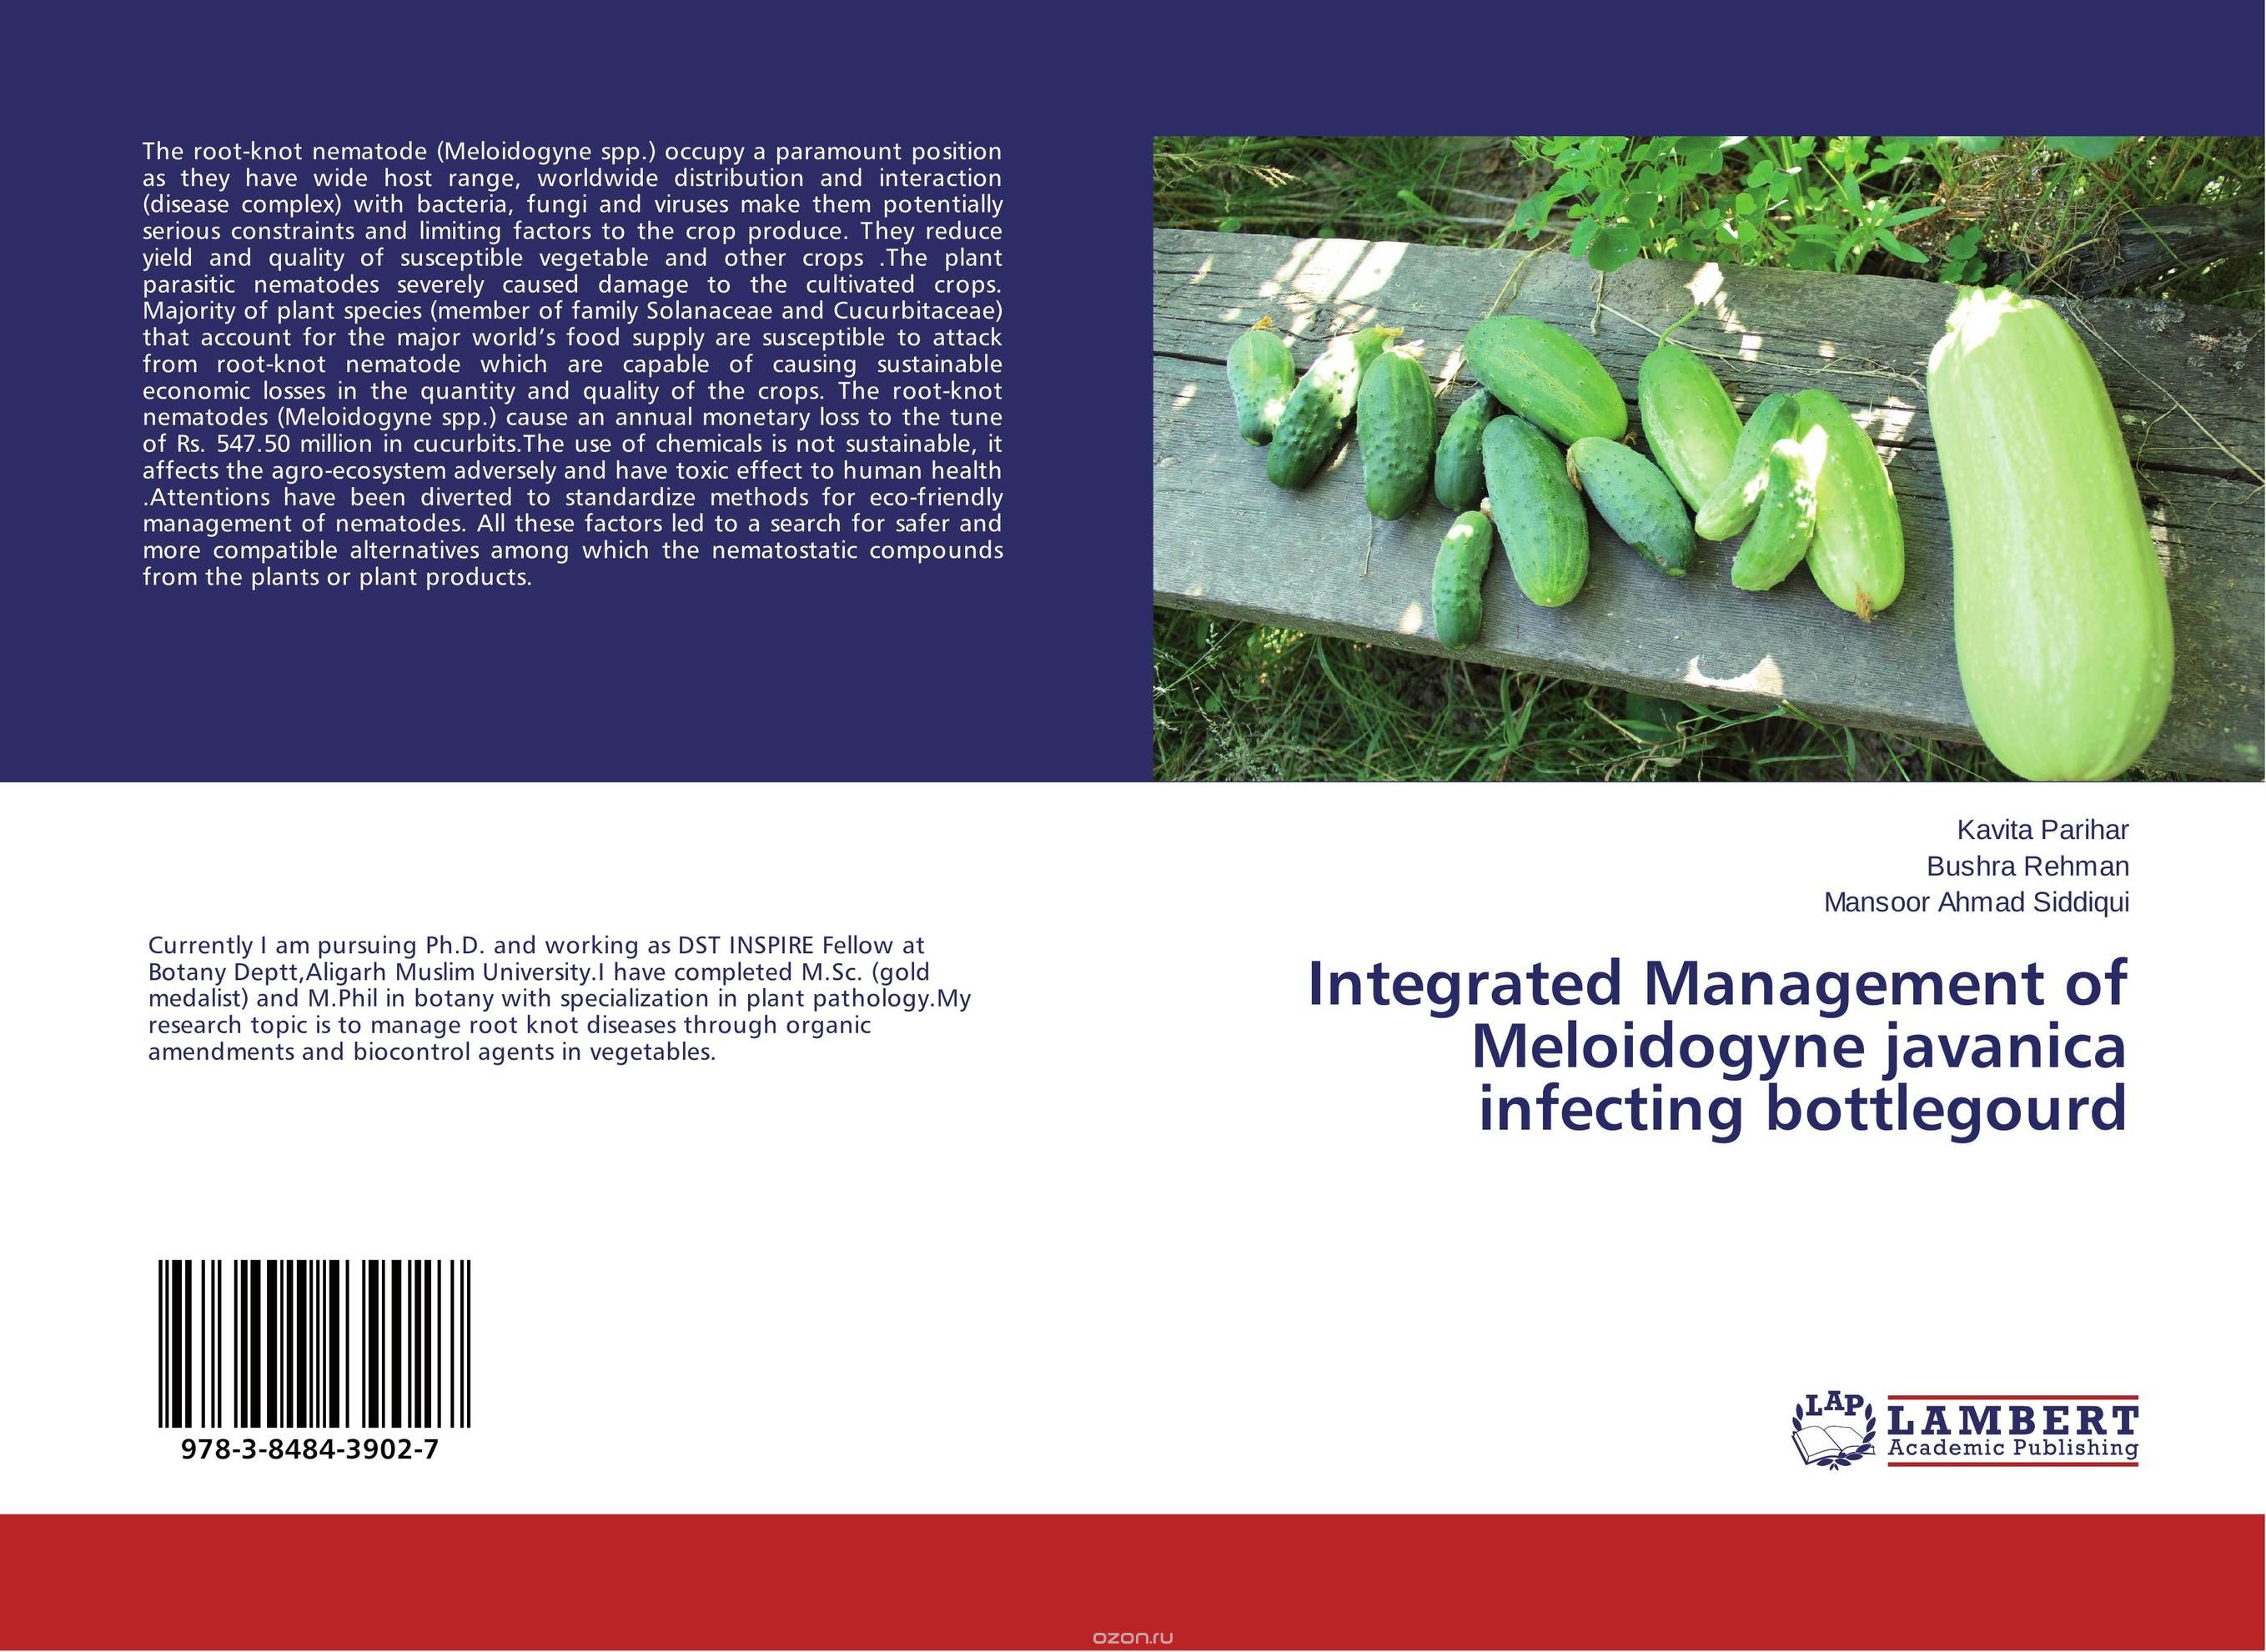 Скачать книгу "Integrated Management of Meloidogyne javanica infecting bottlegourd"